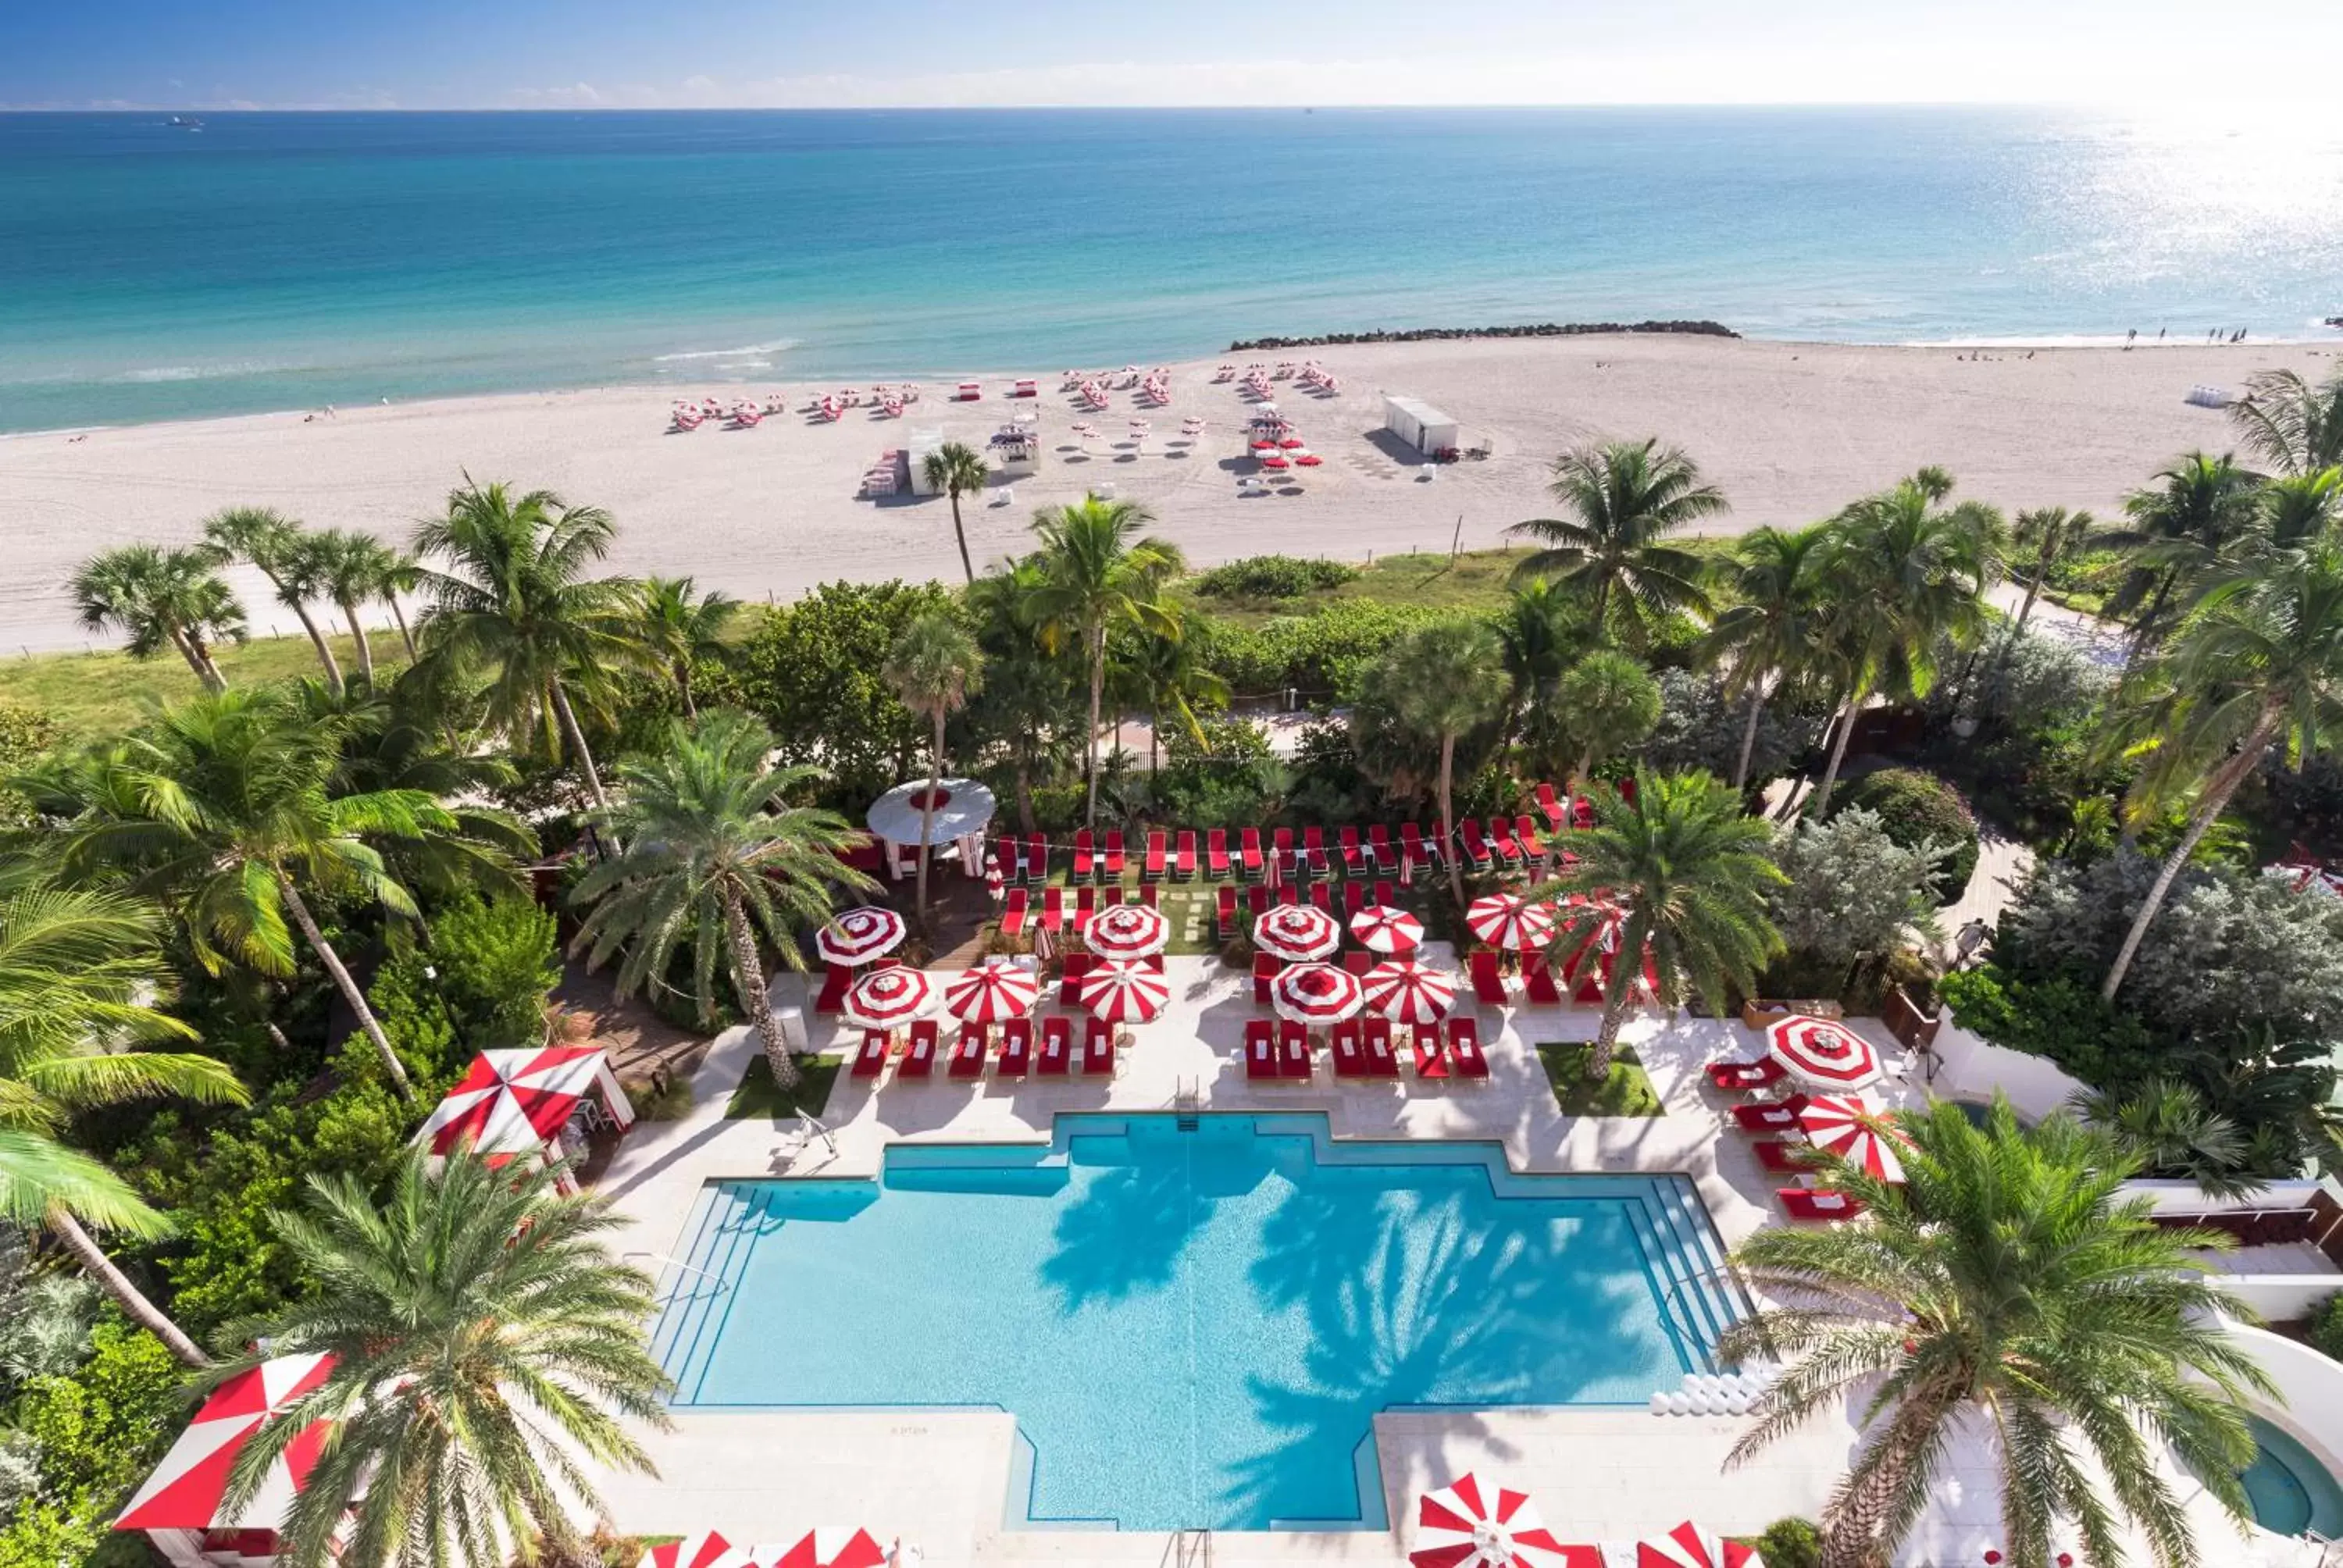 Bird's eye view, Pool View in Faena Hotel Miami Beach